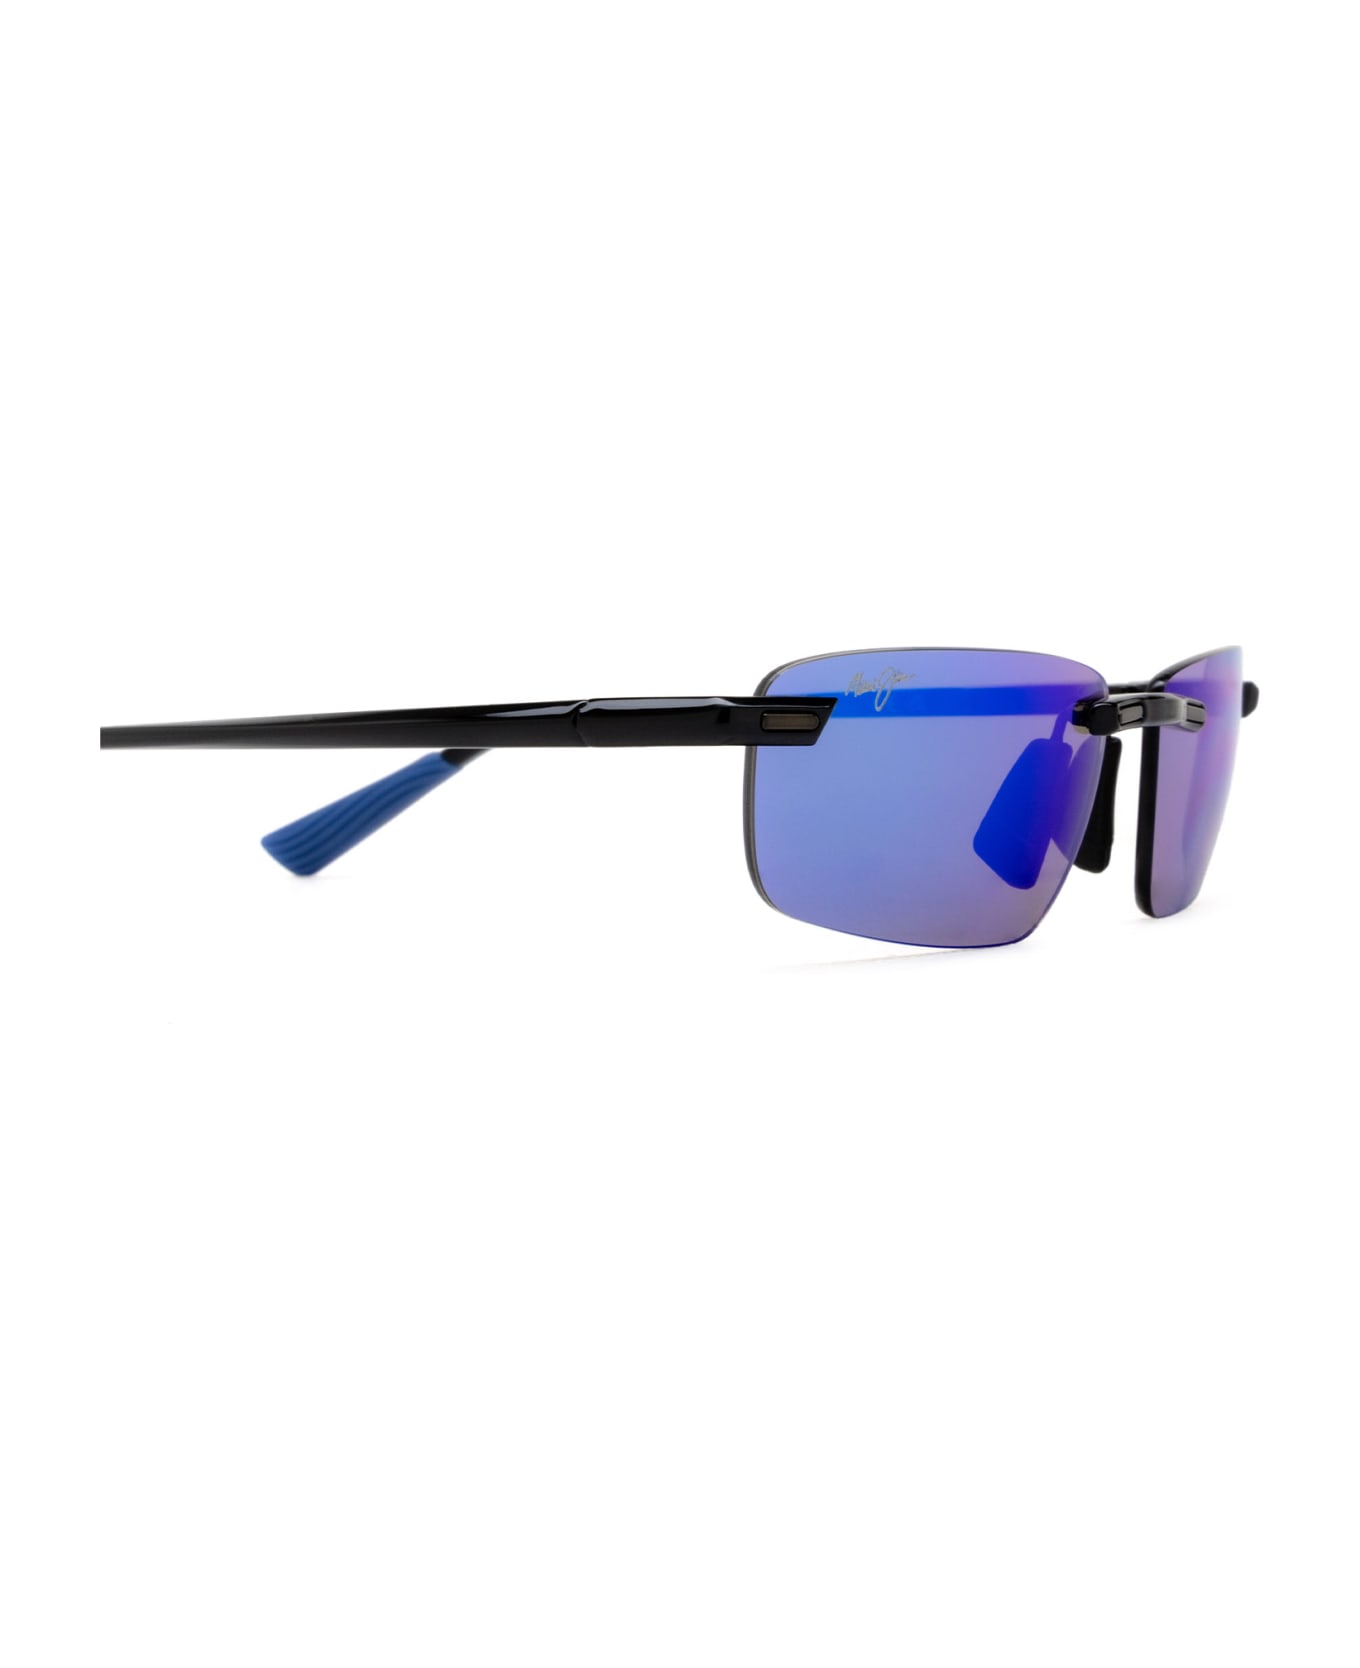 Maui Jim Mj630 Shiny Black W/ Blue Sunglasses - Shiny Black W/ Blue サングラス